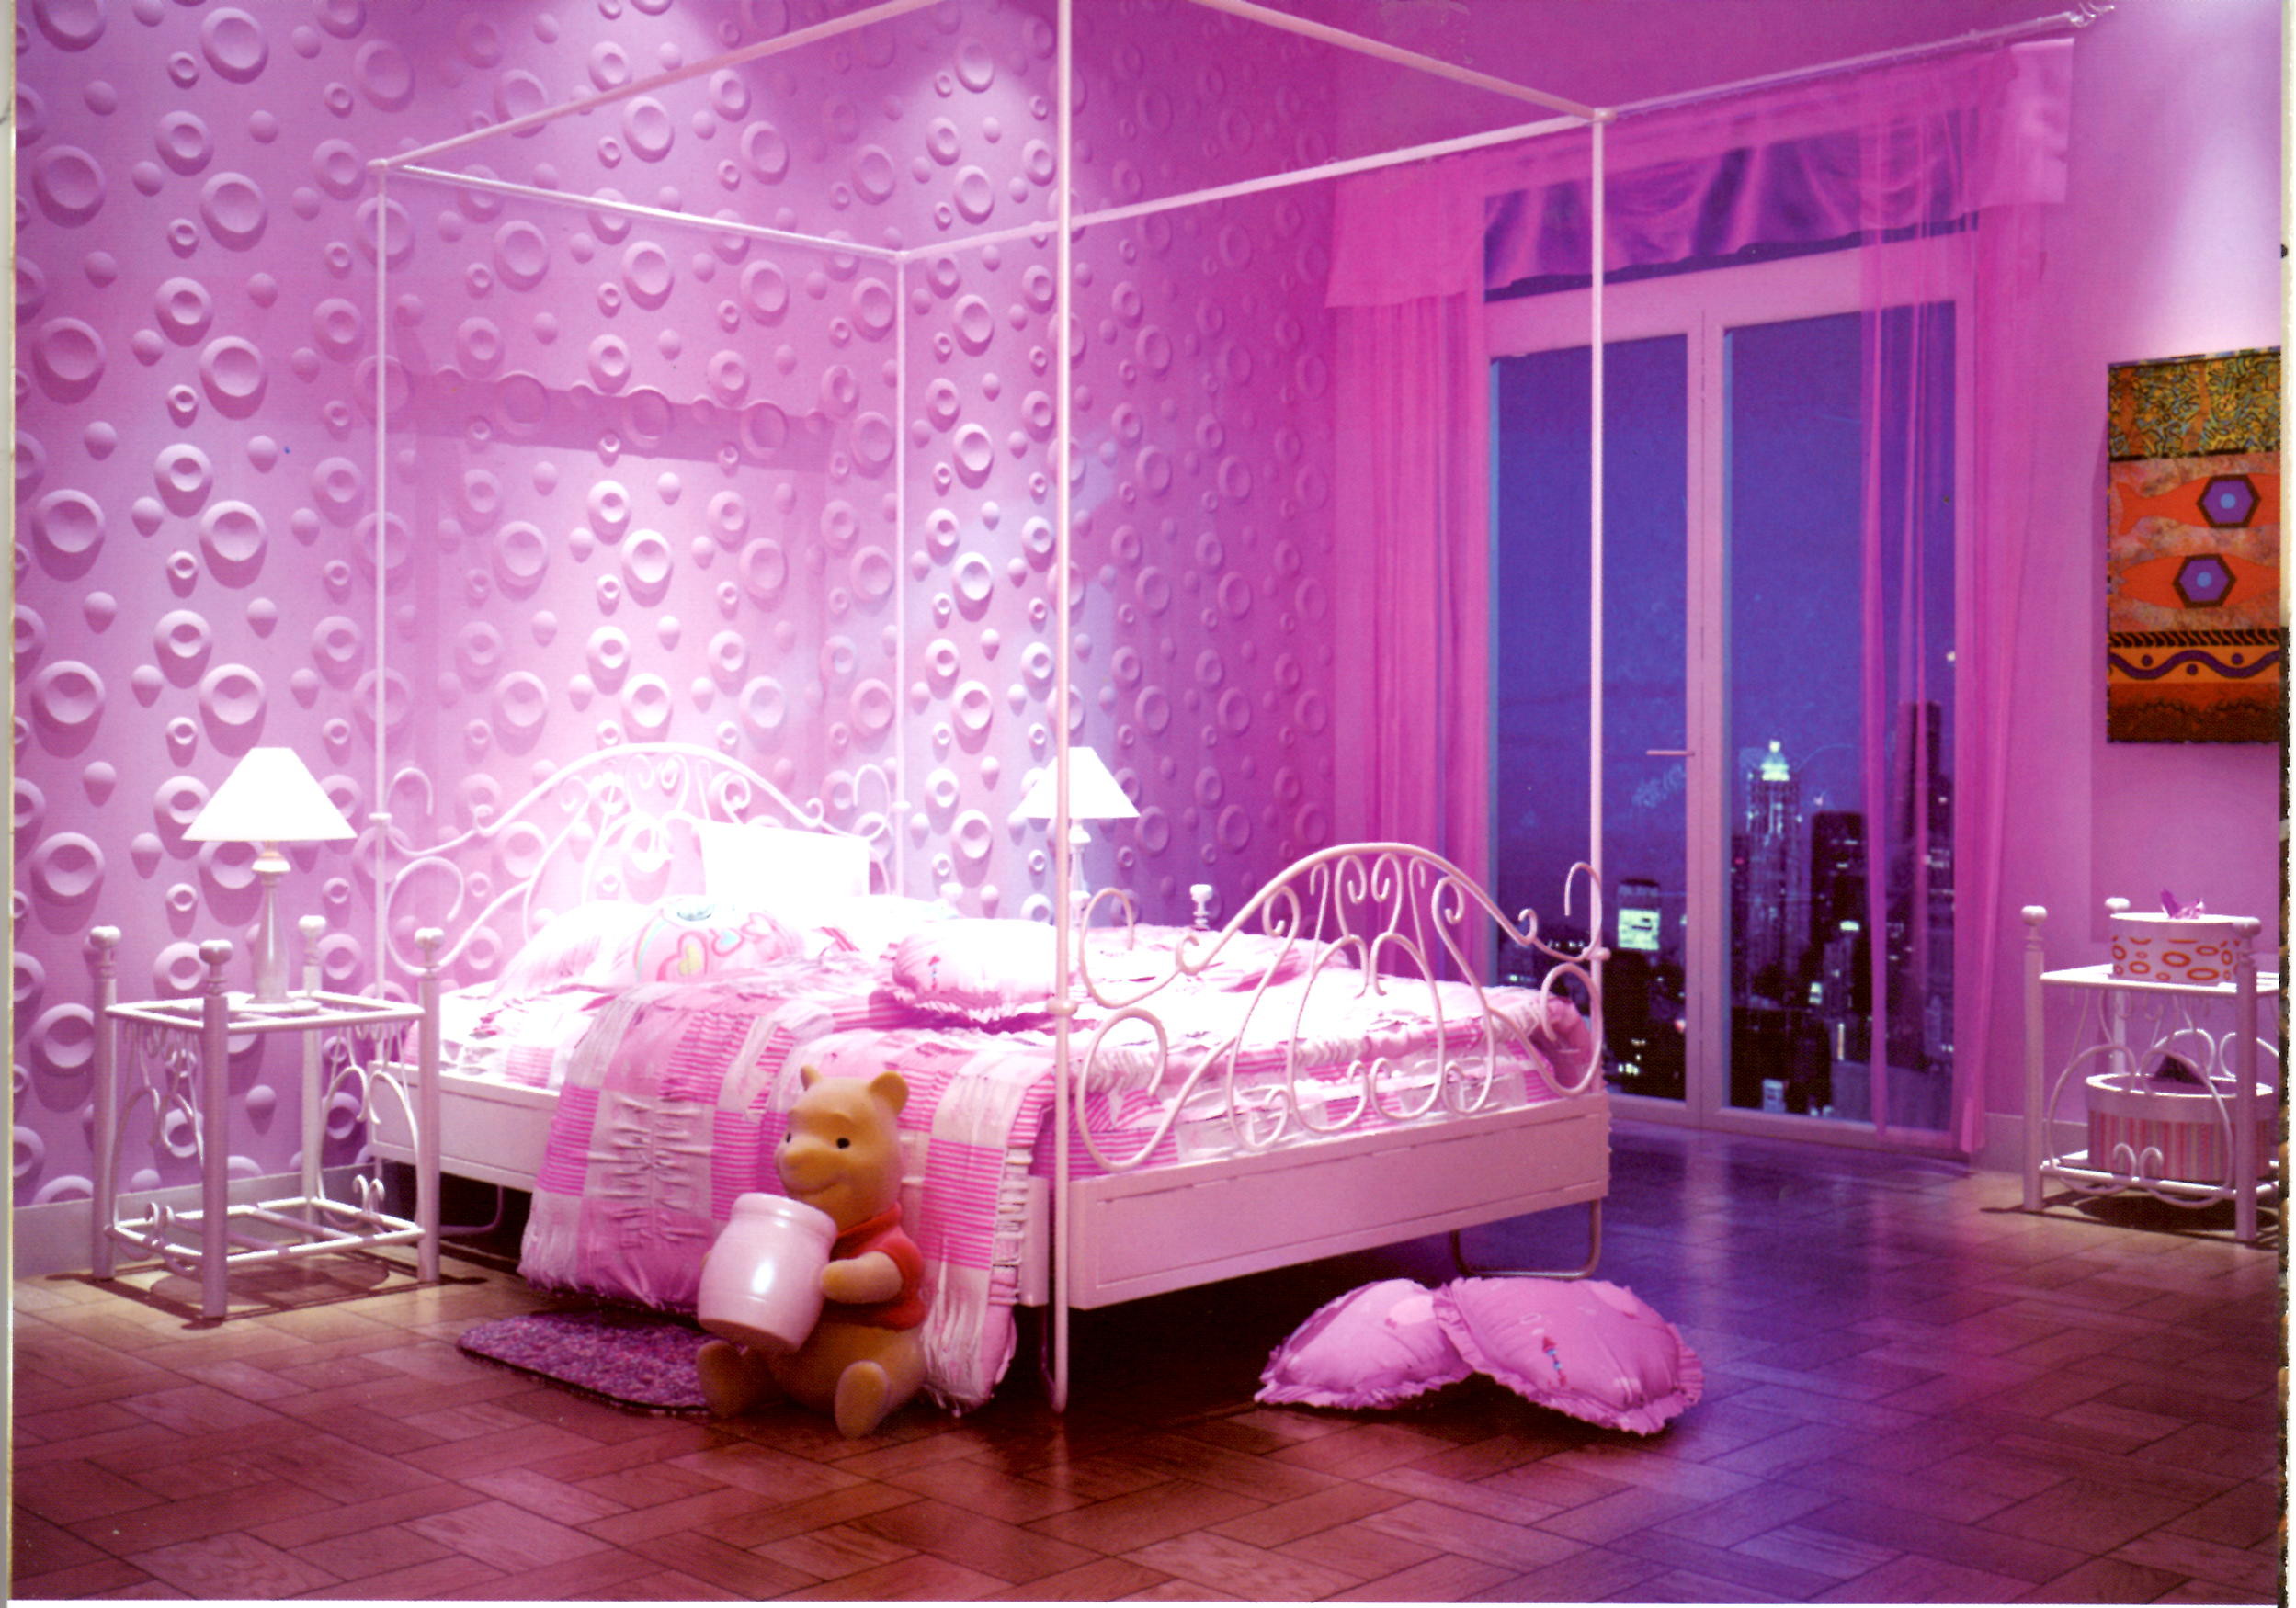 Pink Wallpaper for Bedrooms wallpaper Pink Wallpaper for Bedrooms hd 2498x1750